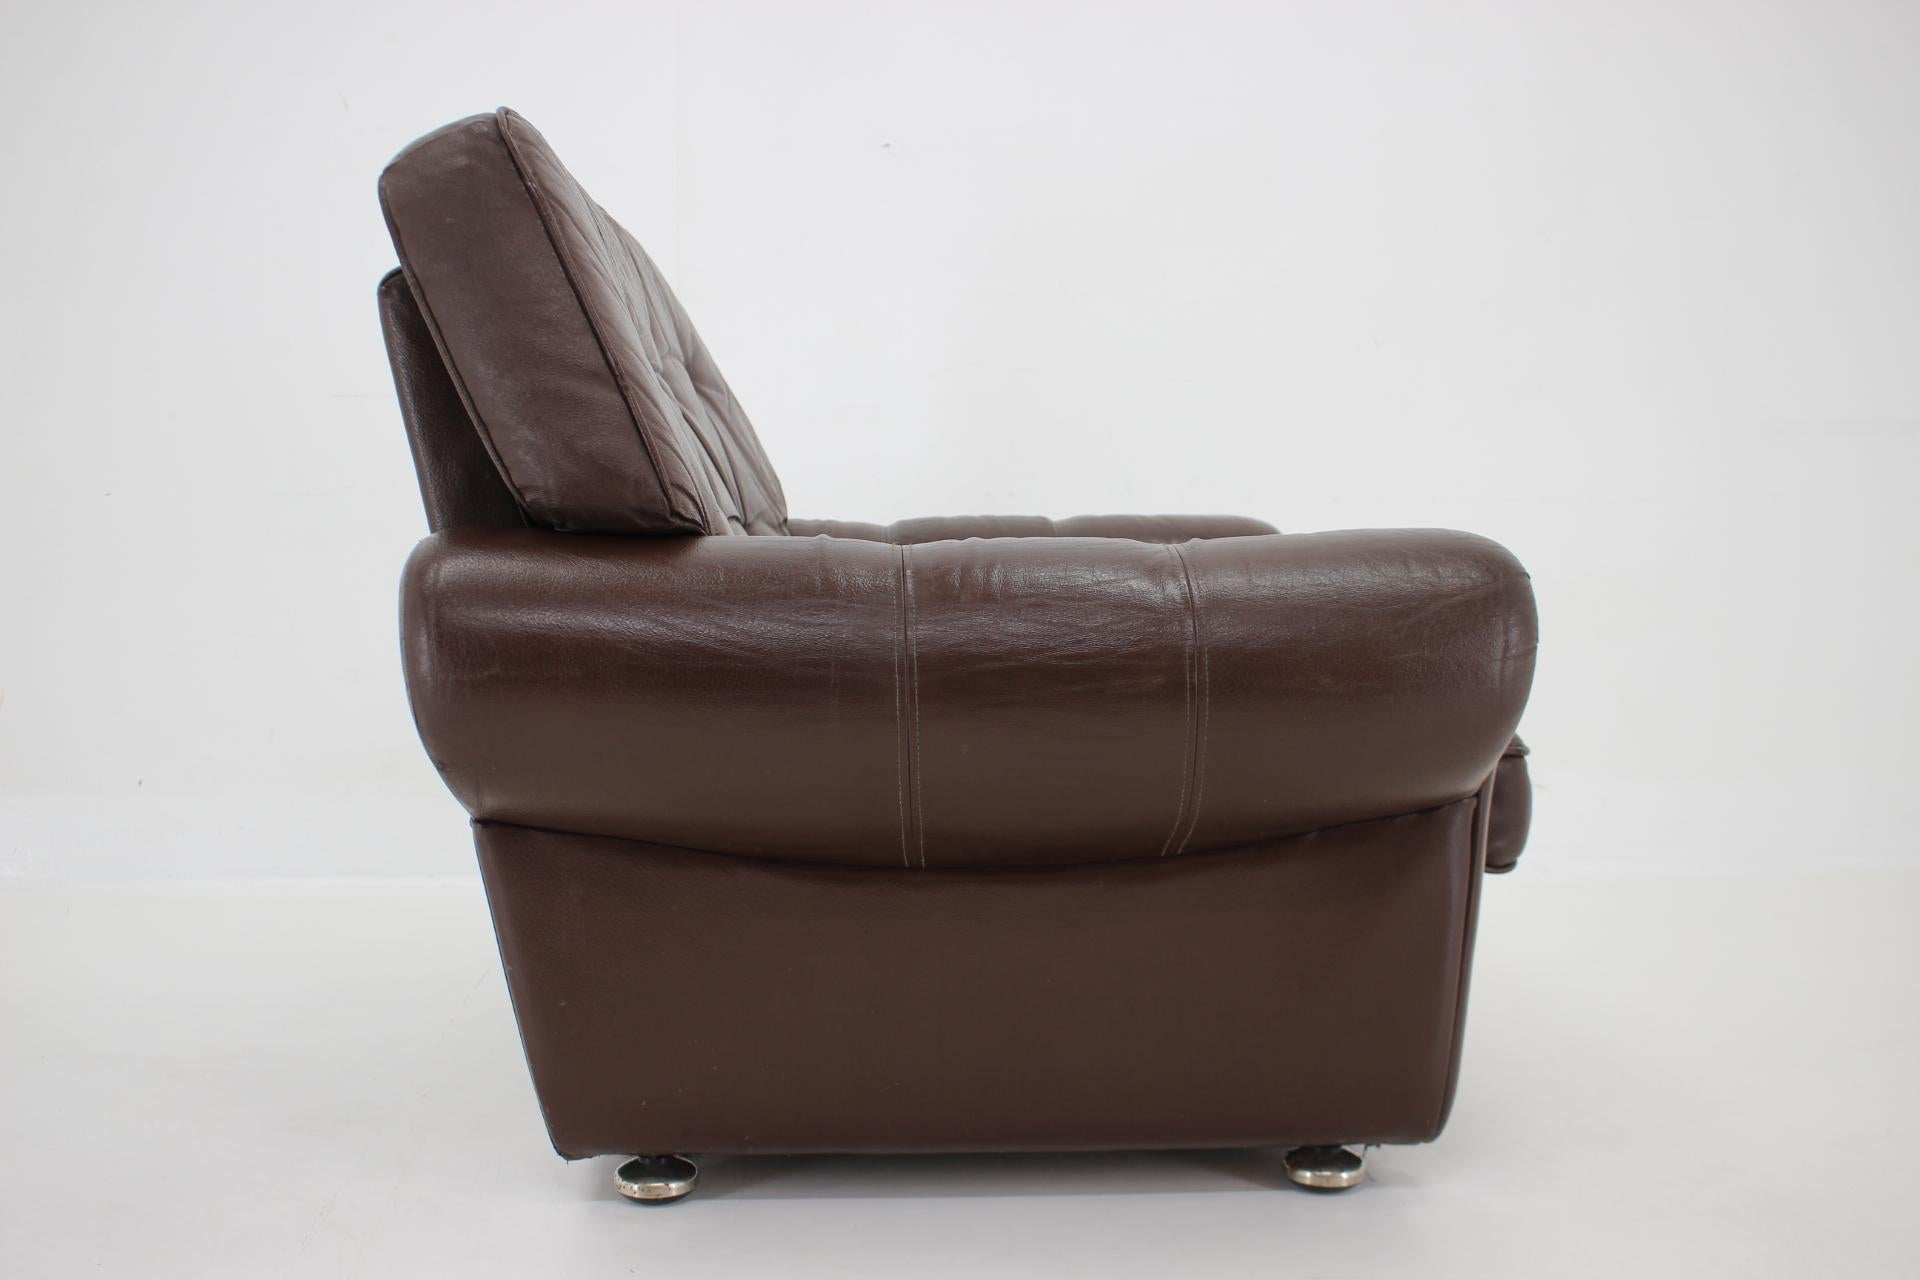 1970s Danish Brown Leather Armchair, Denmark For Sale 1